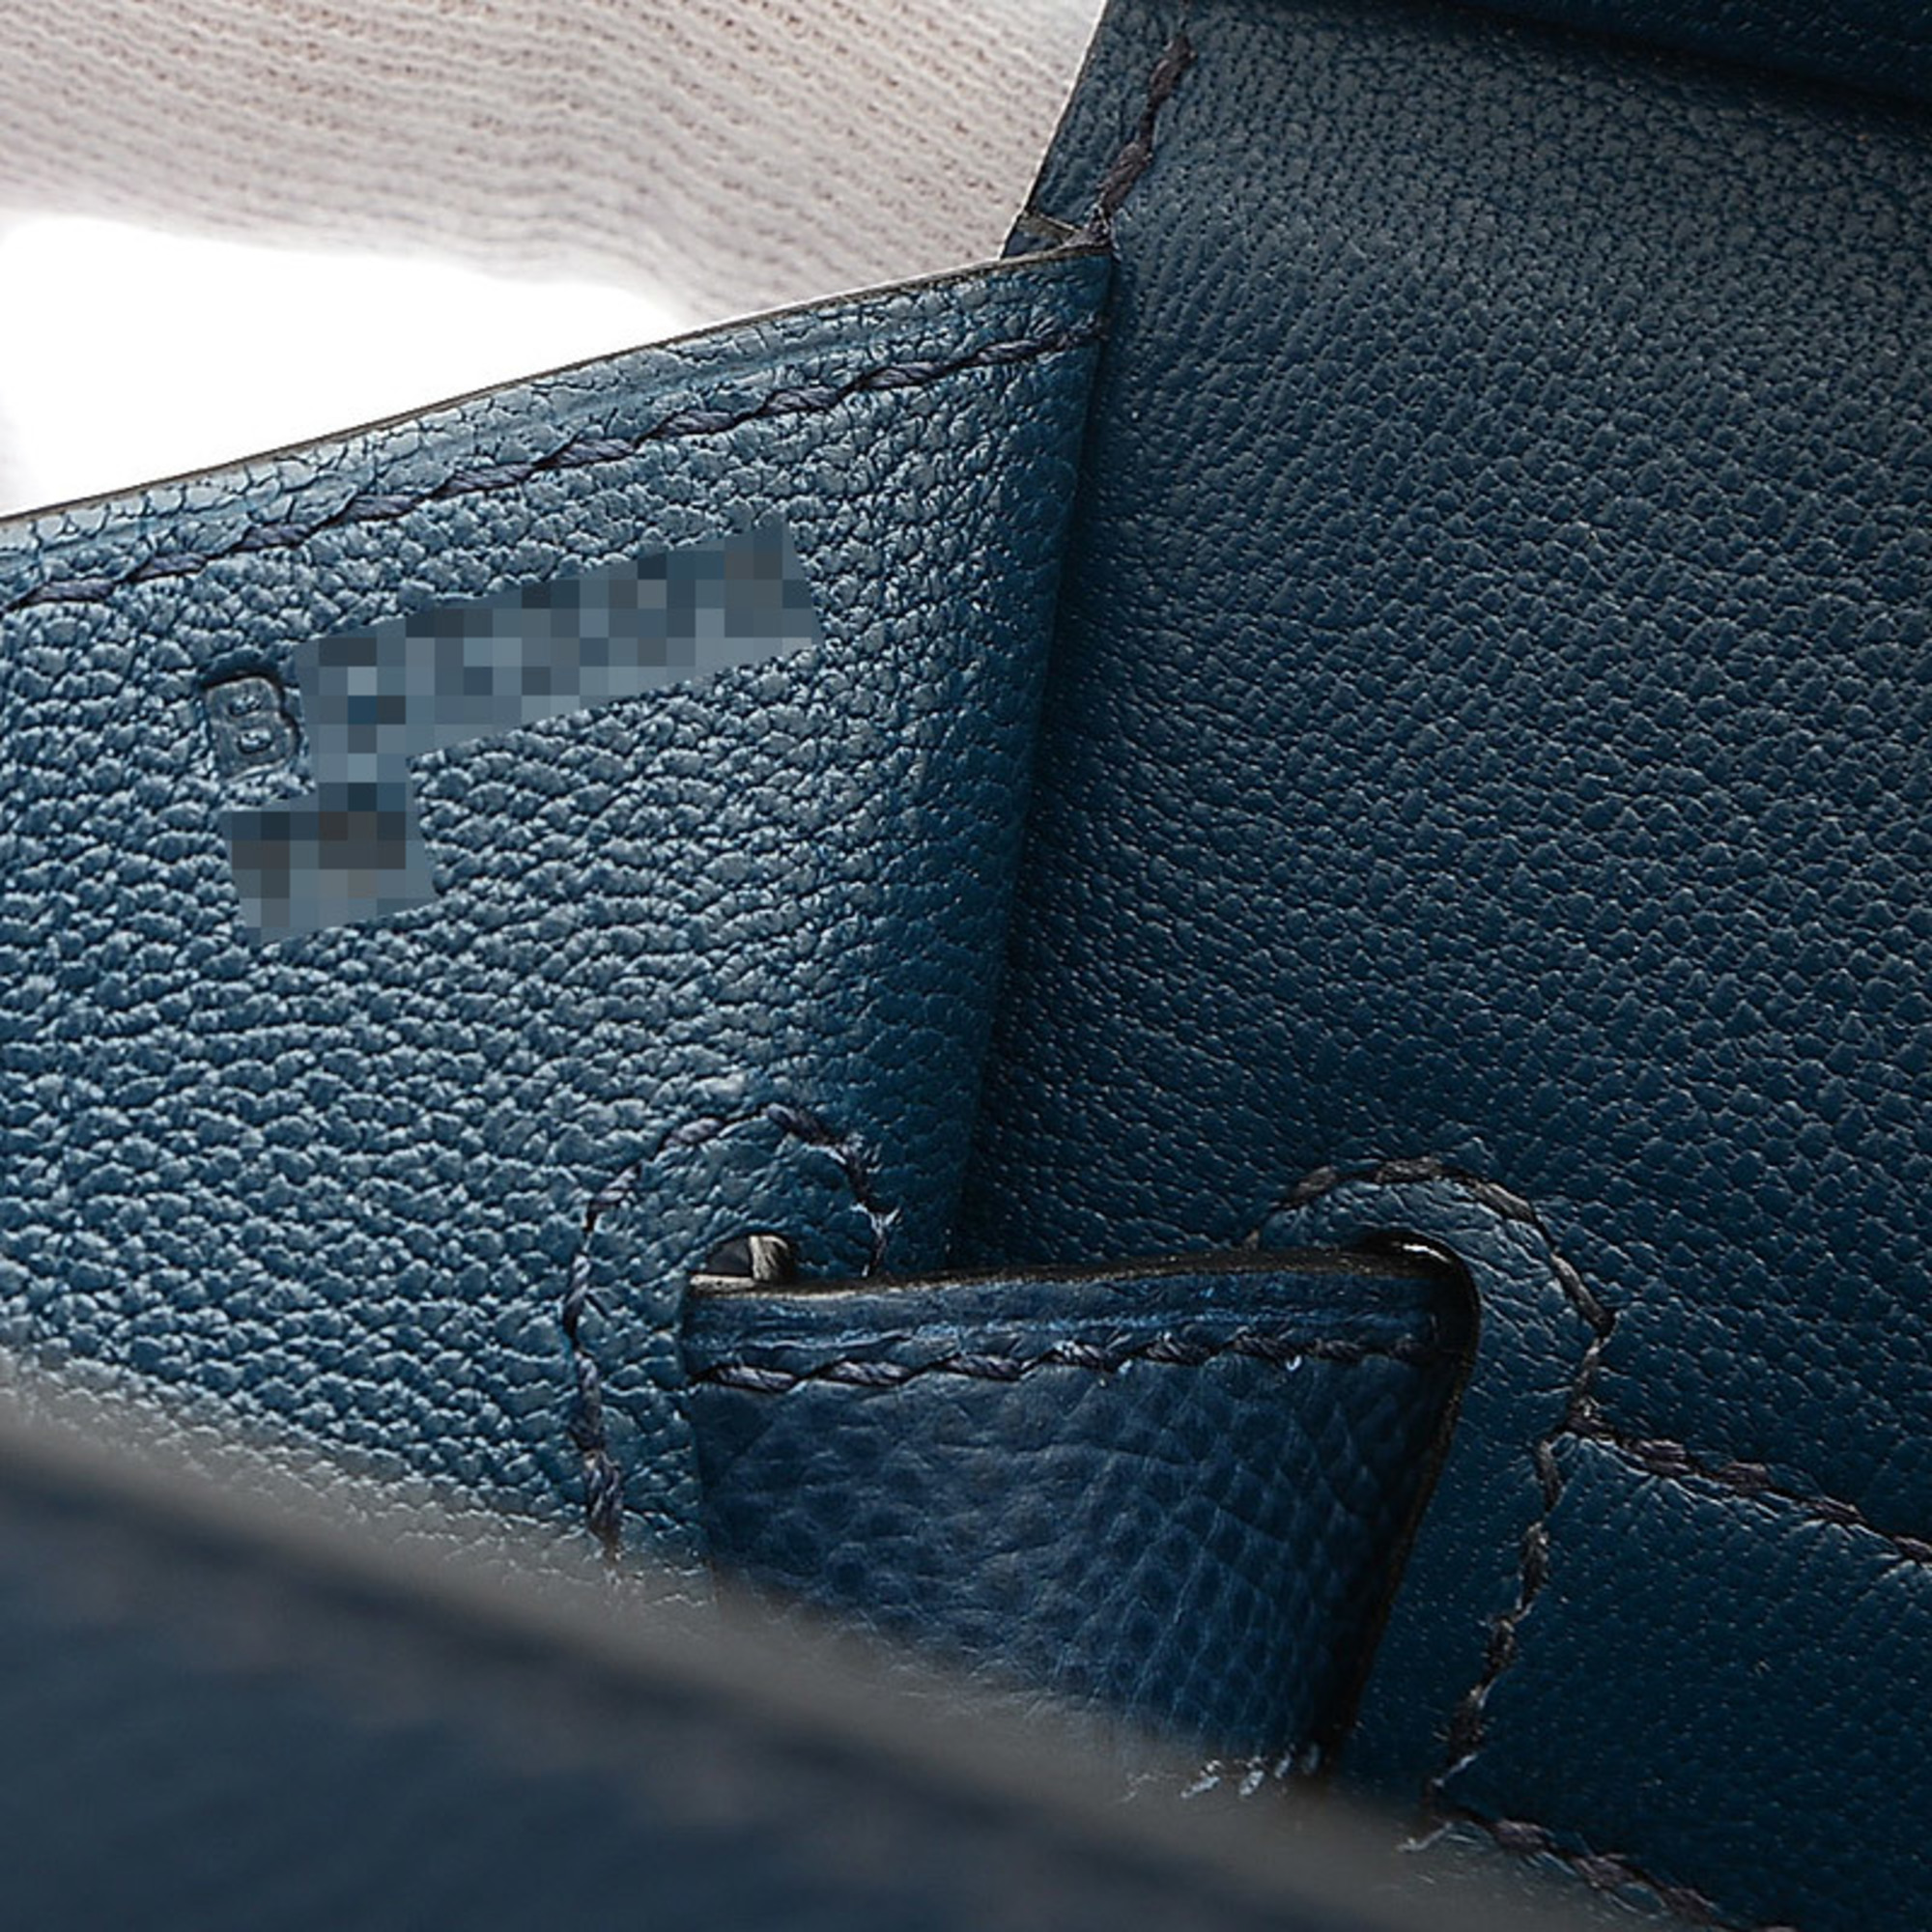 Hermes Birkin 30 Serie Epson Handbag Blue de Plus Silver metal fittings B stamp